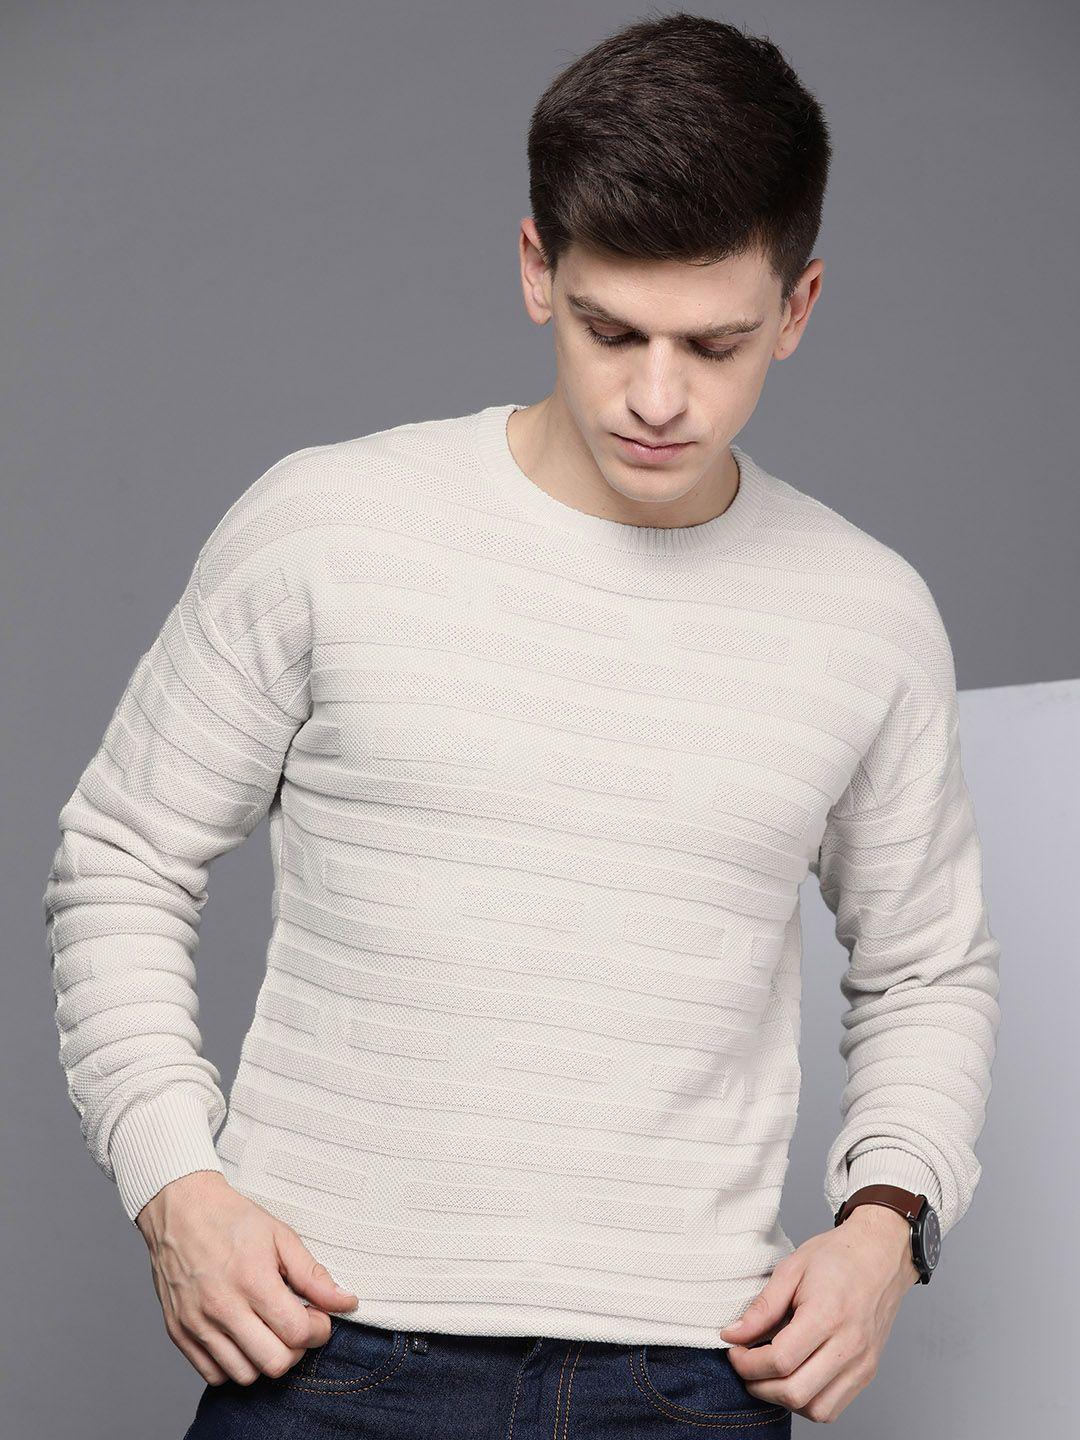 kenneth cole men off white self design open-knit pure cotton pullover sweater